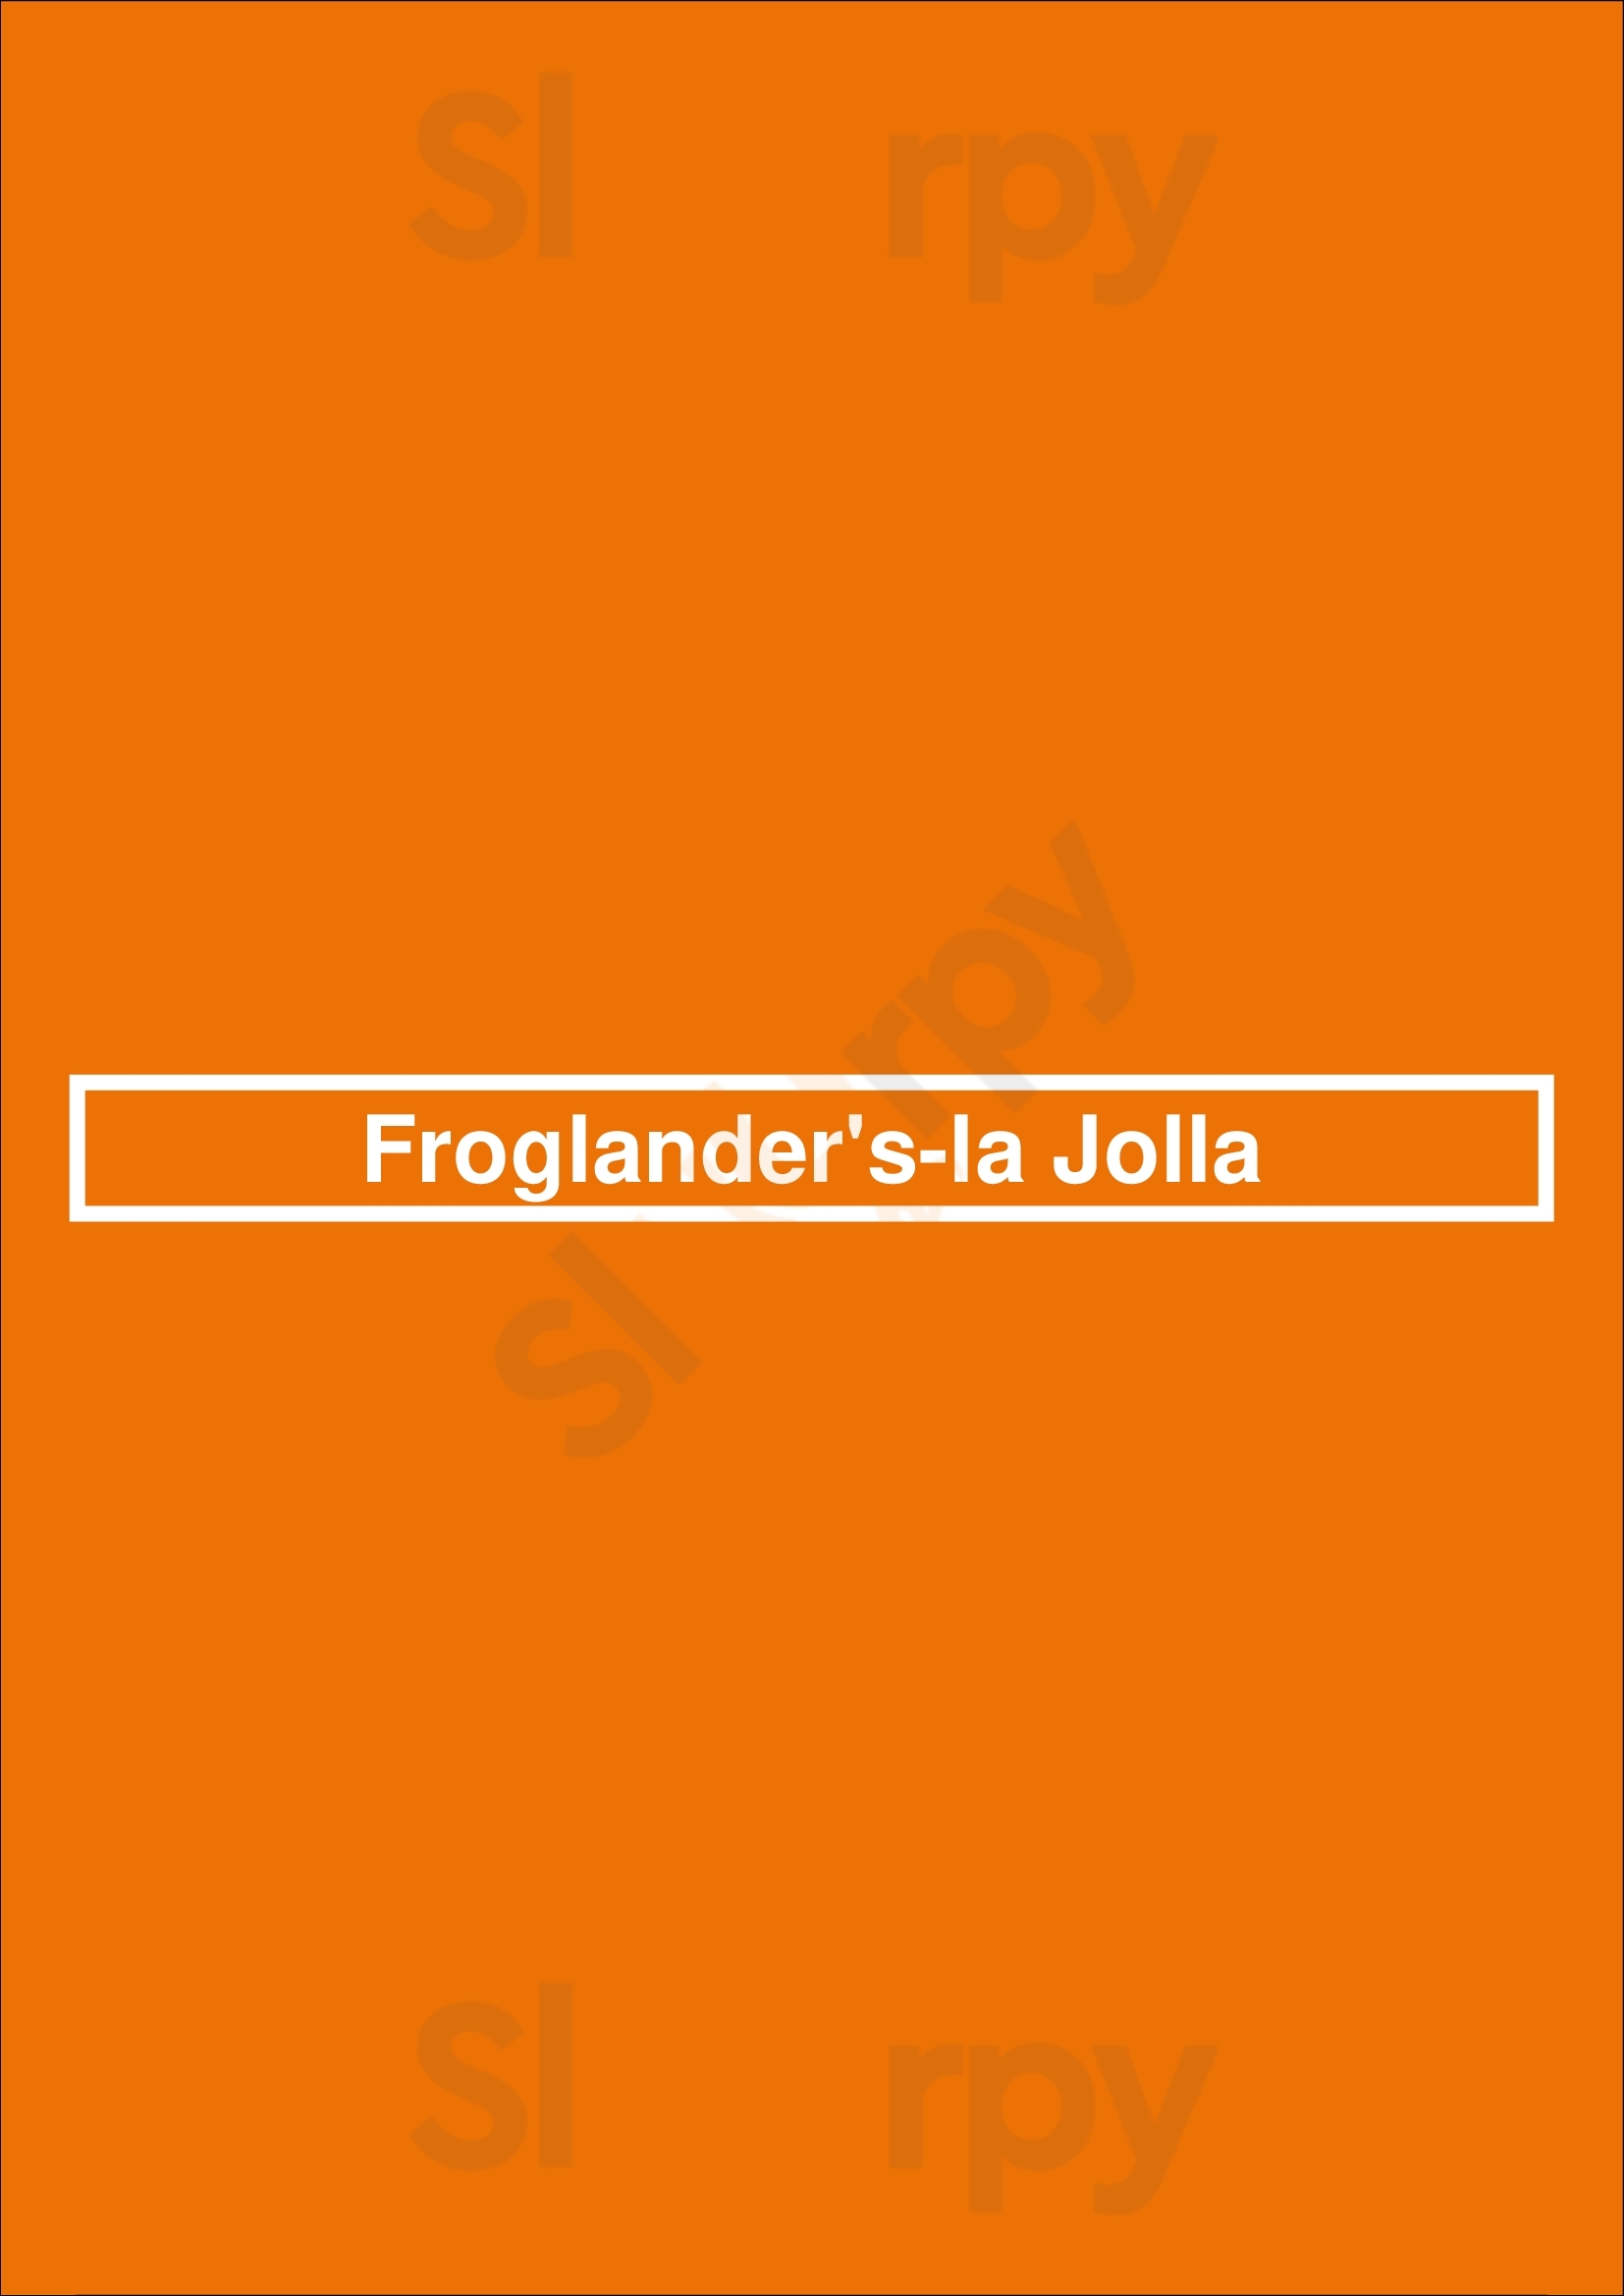 Froglanders Crepes & Yogurt La Jolla La Jolla Menu - 1